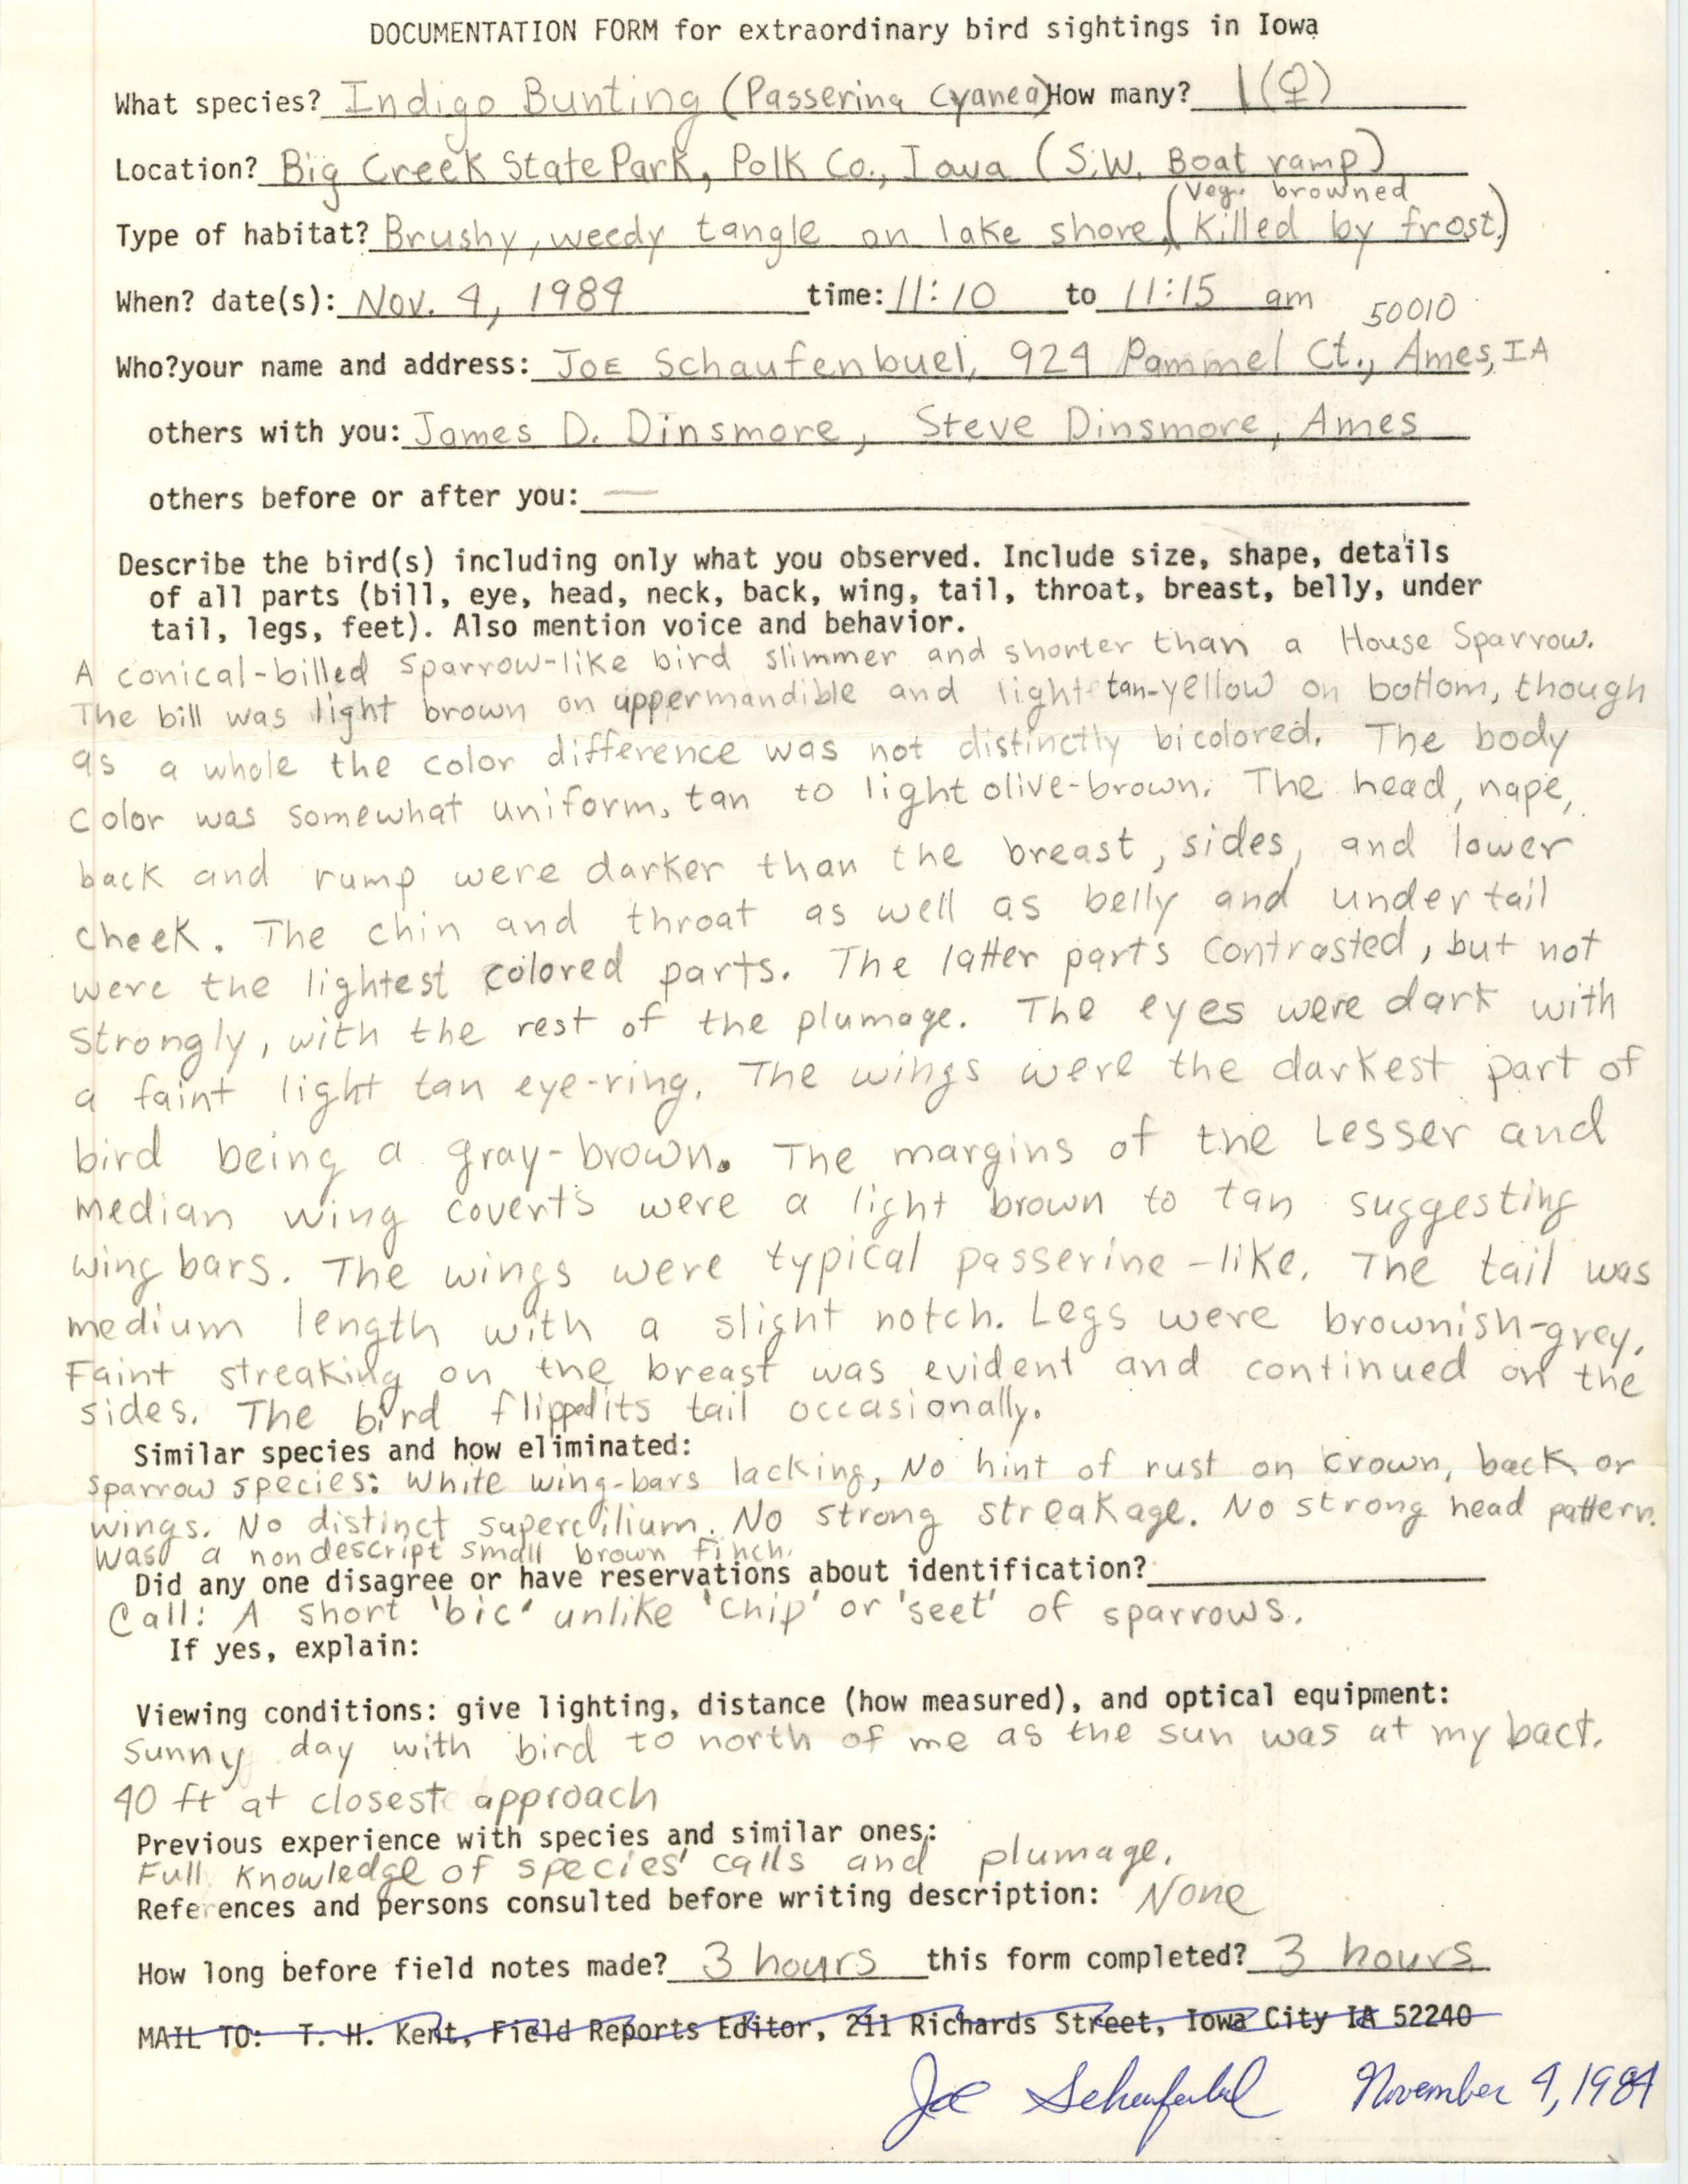 Rare bird documentation form for Indigo Bunting at Big Creek State Park, 1984